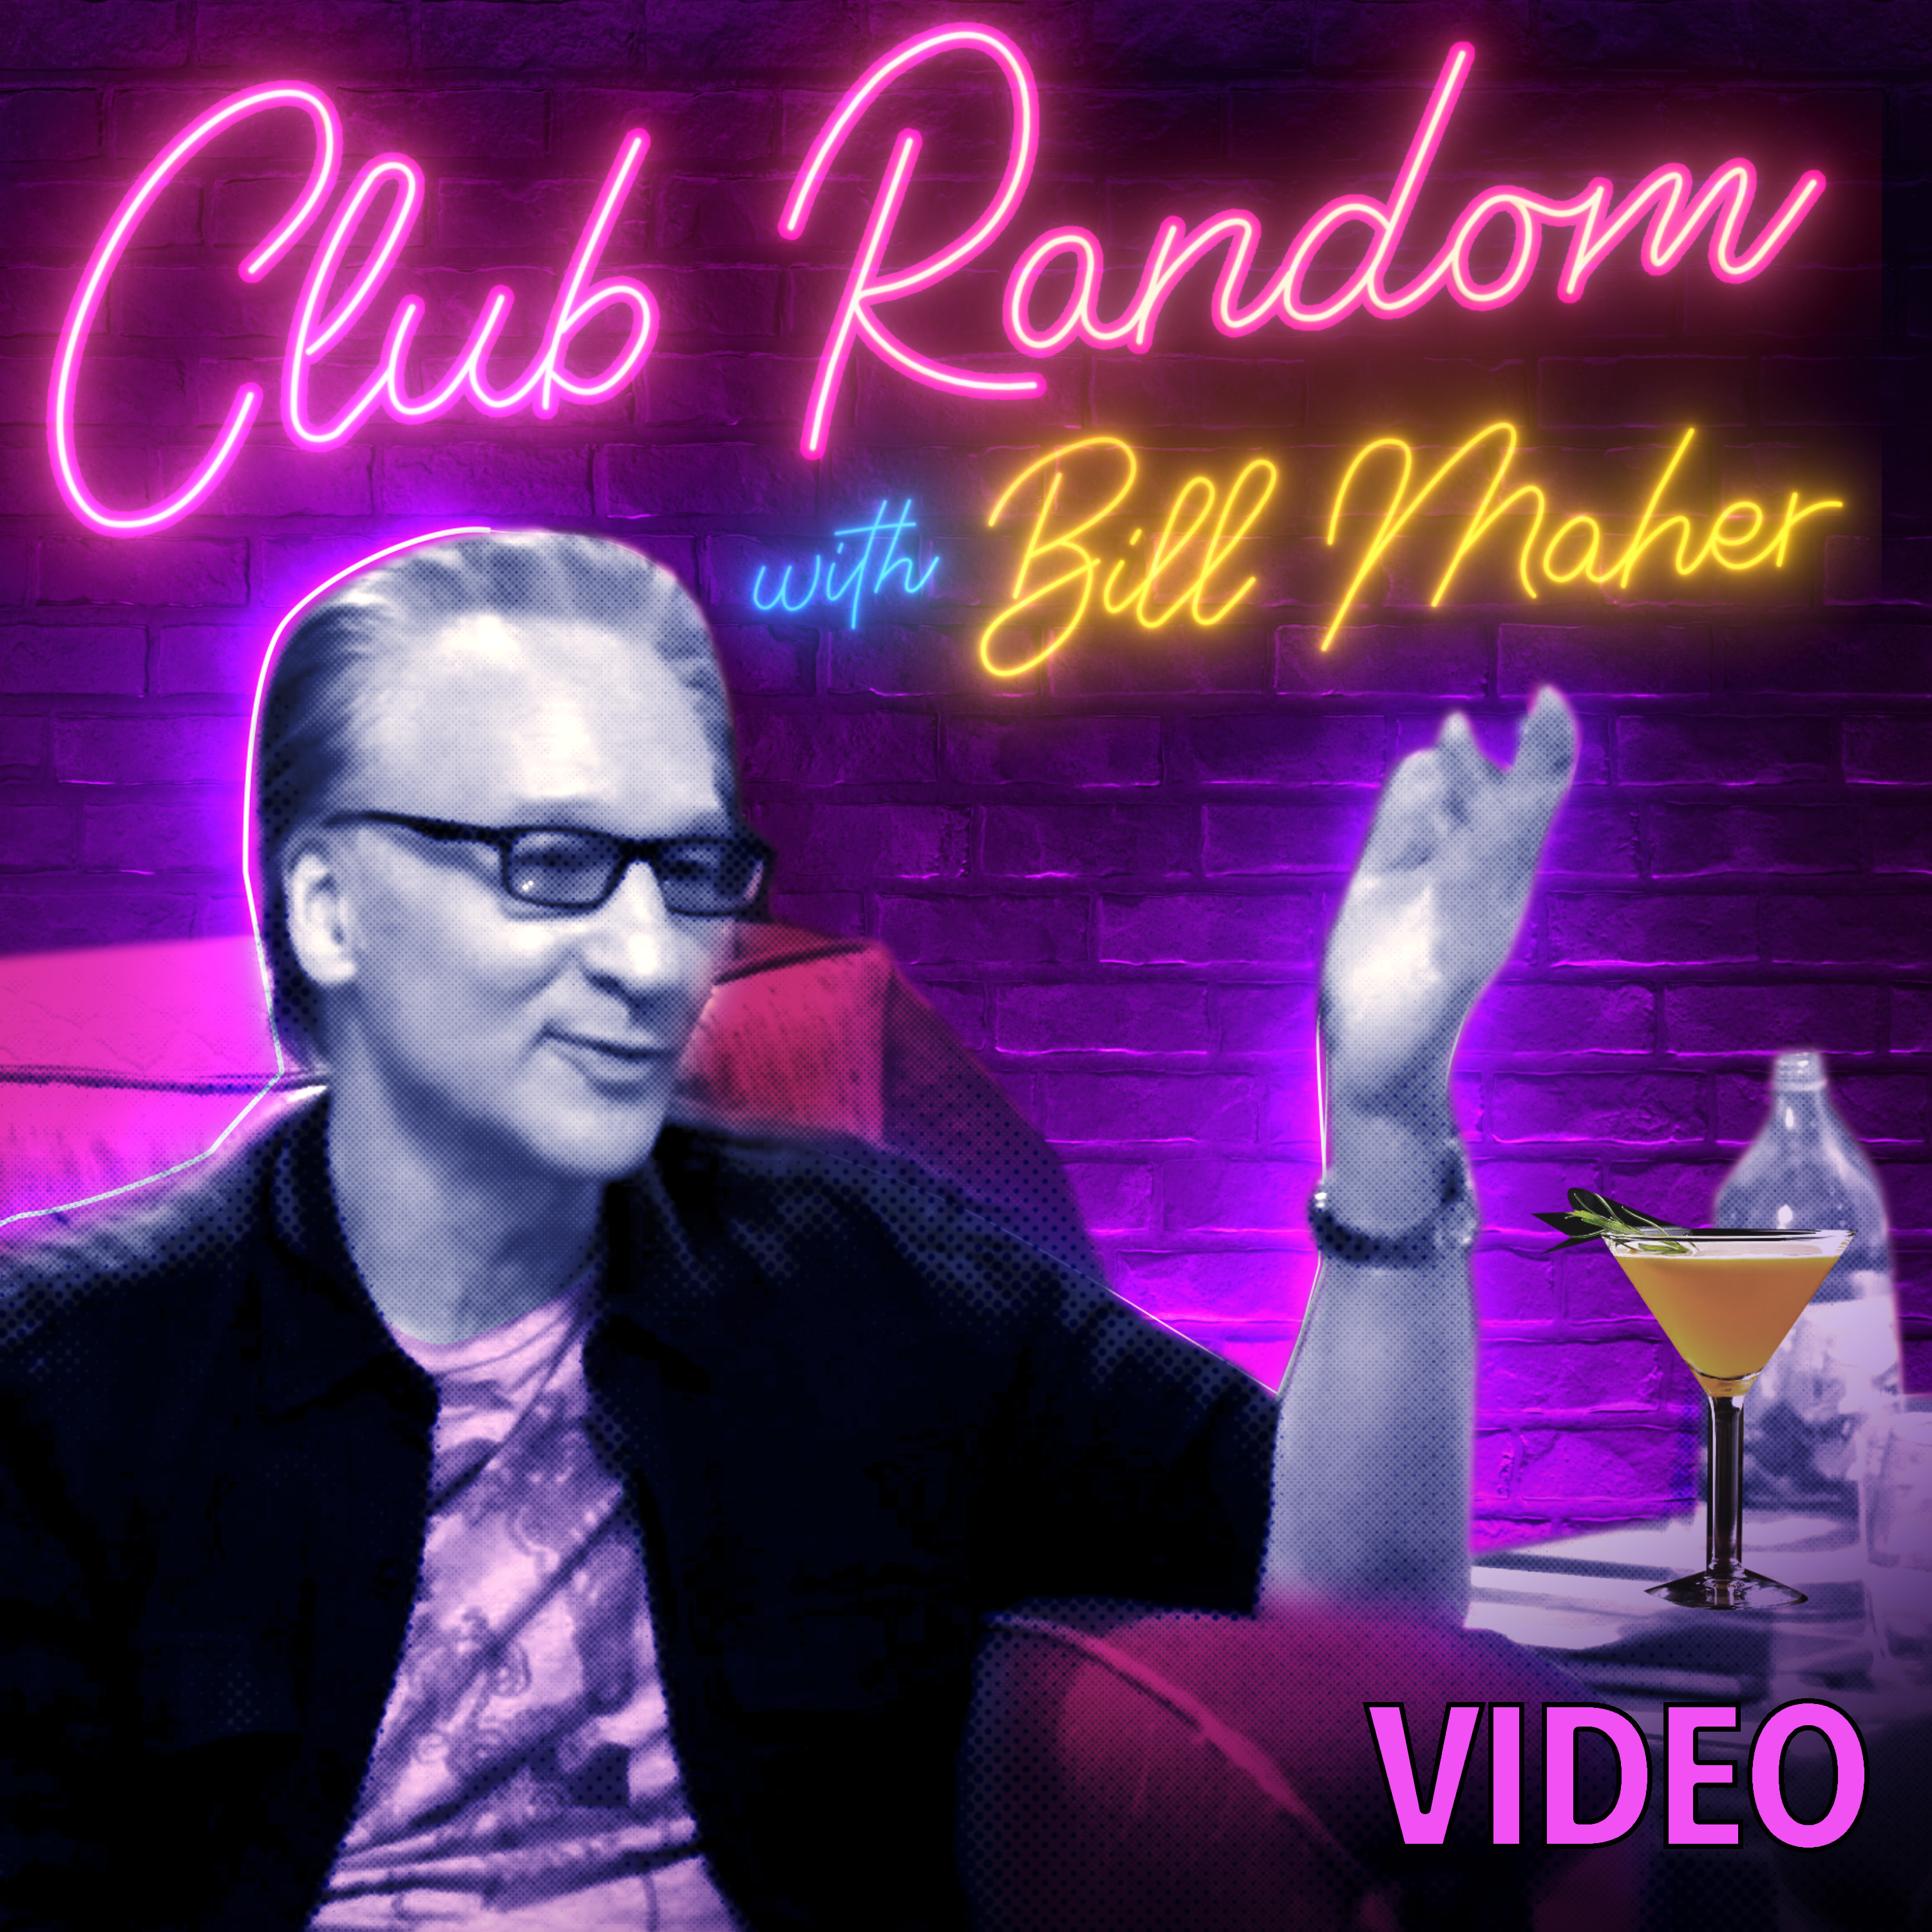 Video: Sebastian Maniscalco | Club Random with Bill Maher